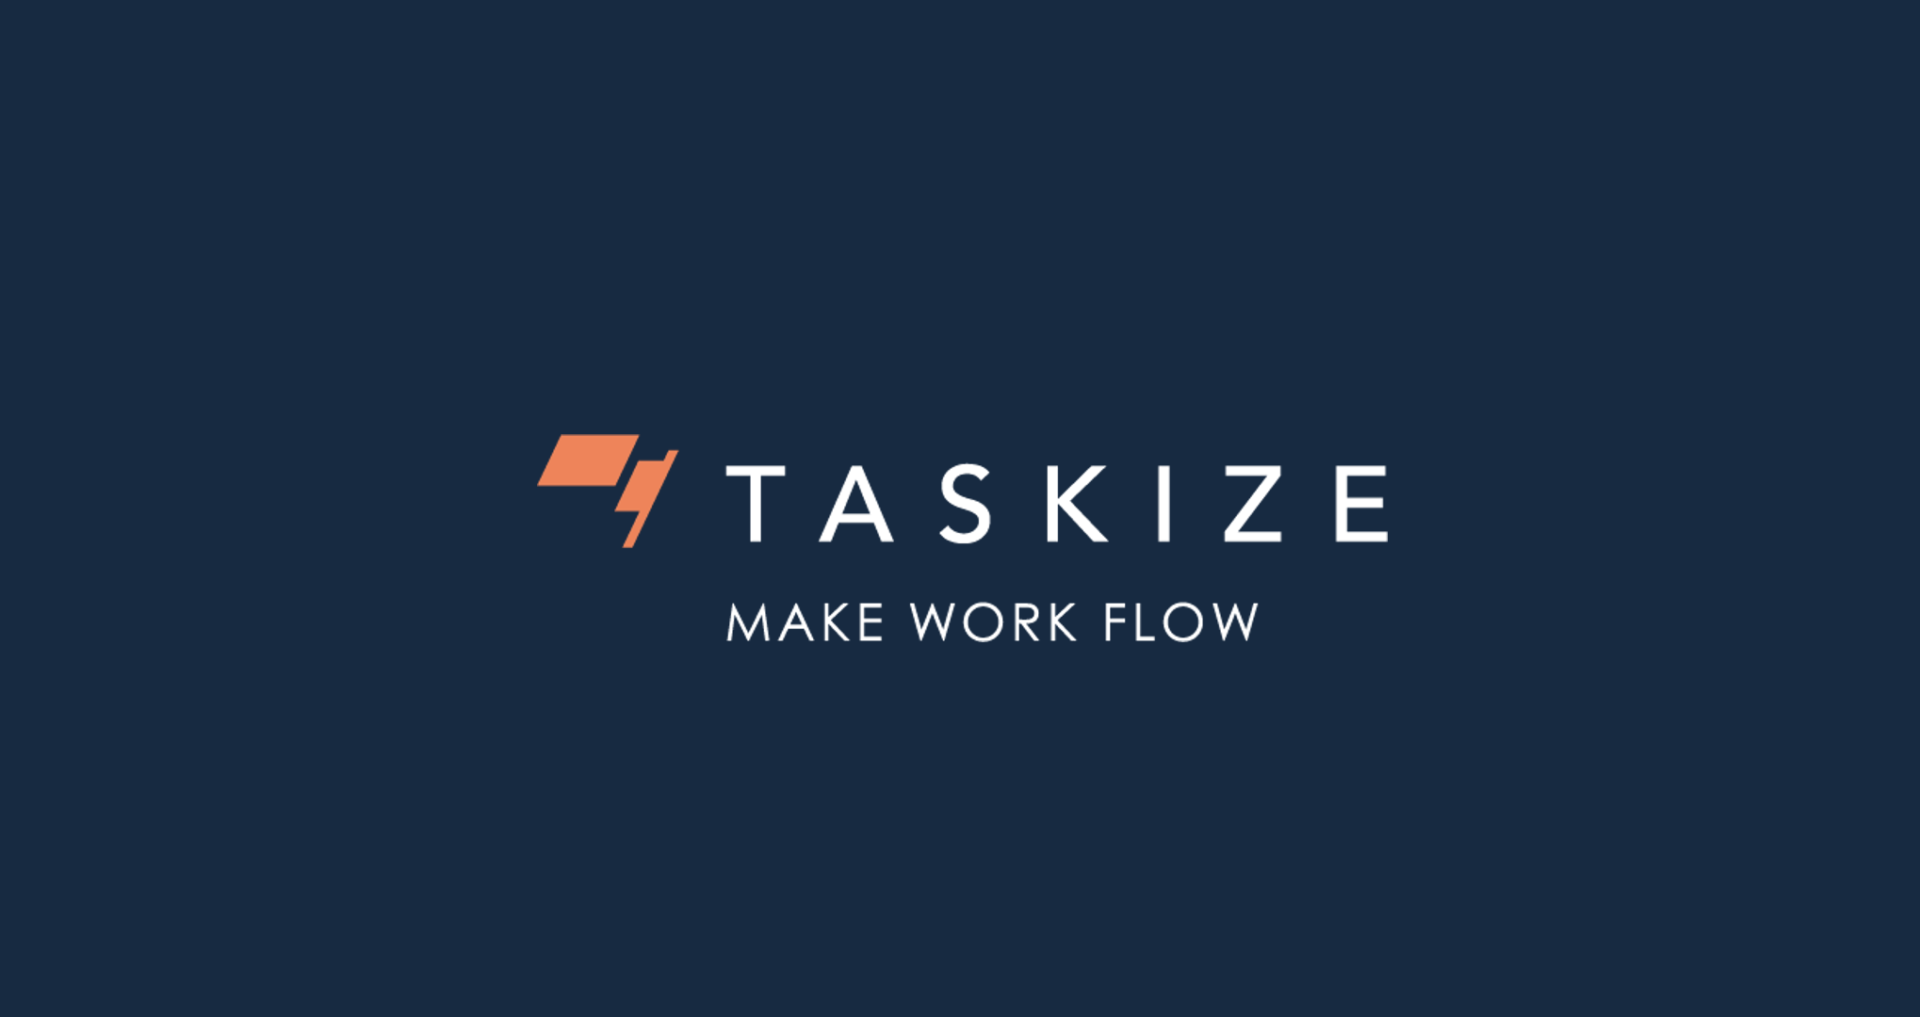 Taskize logo on navy background